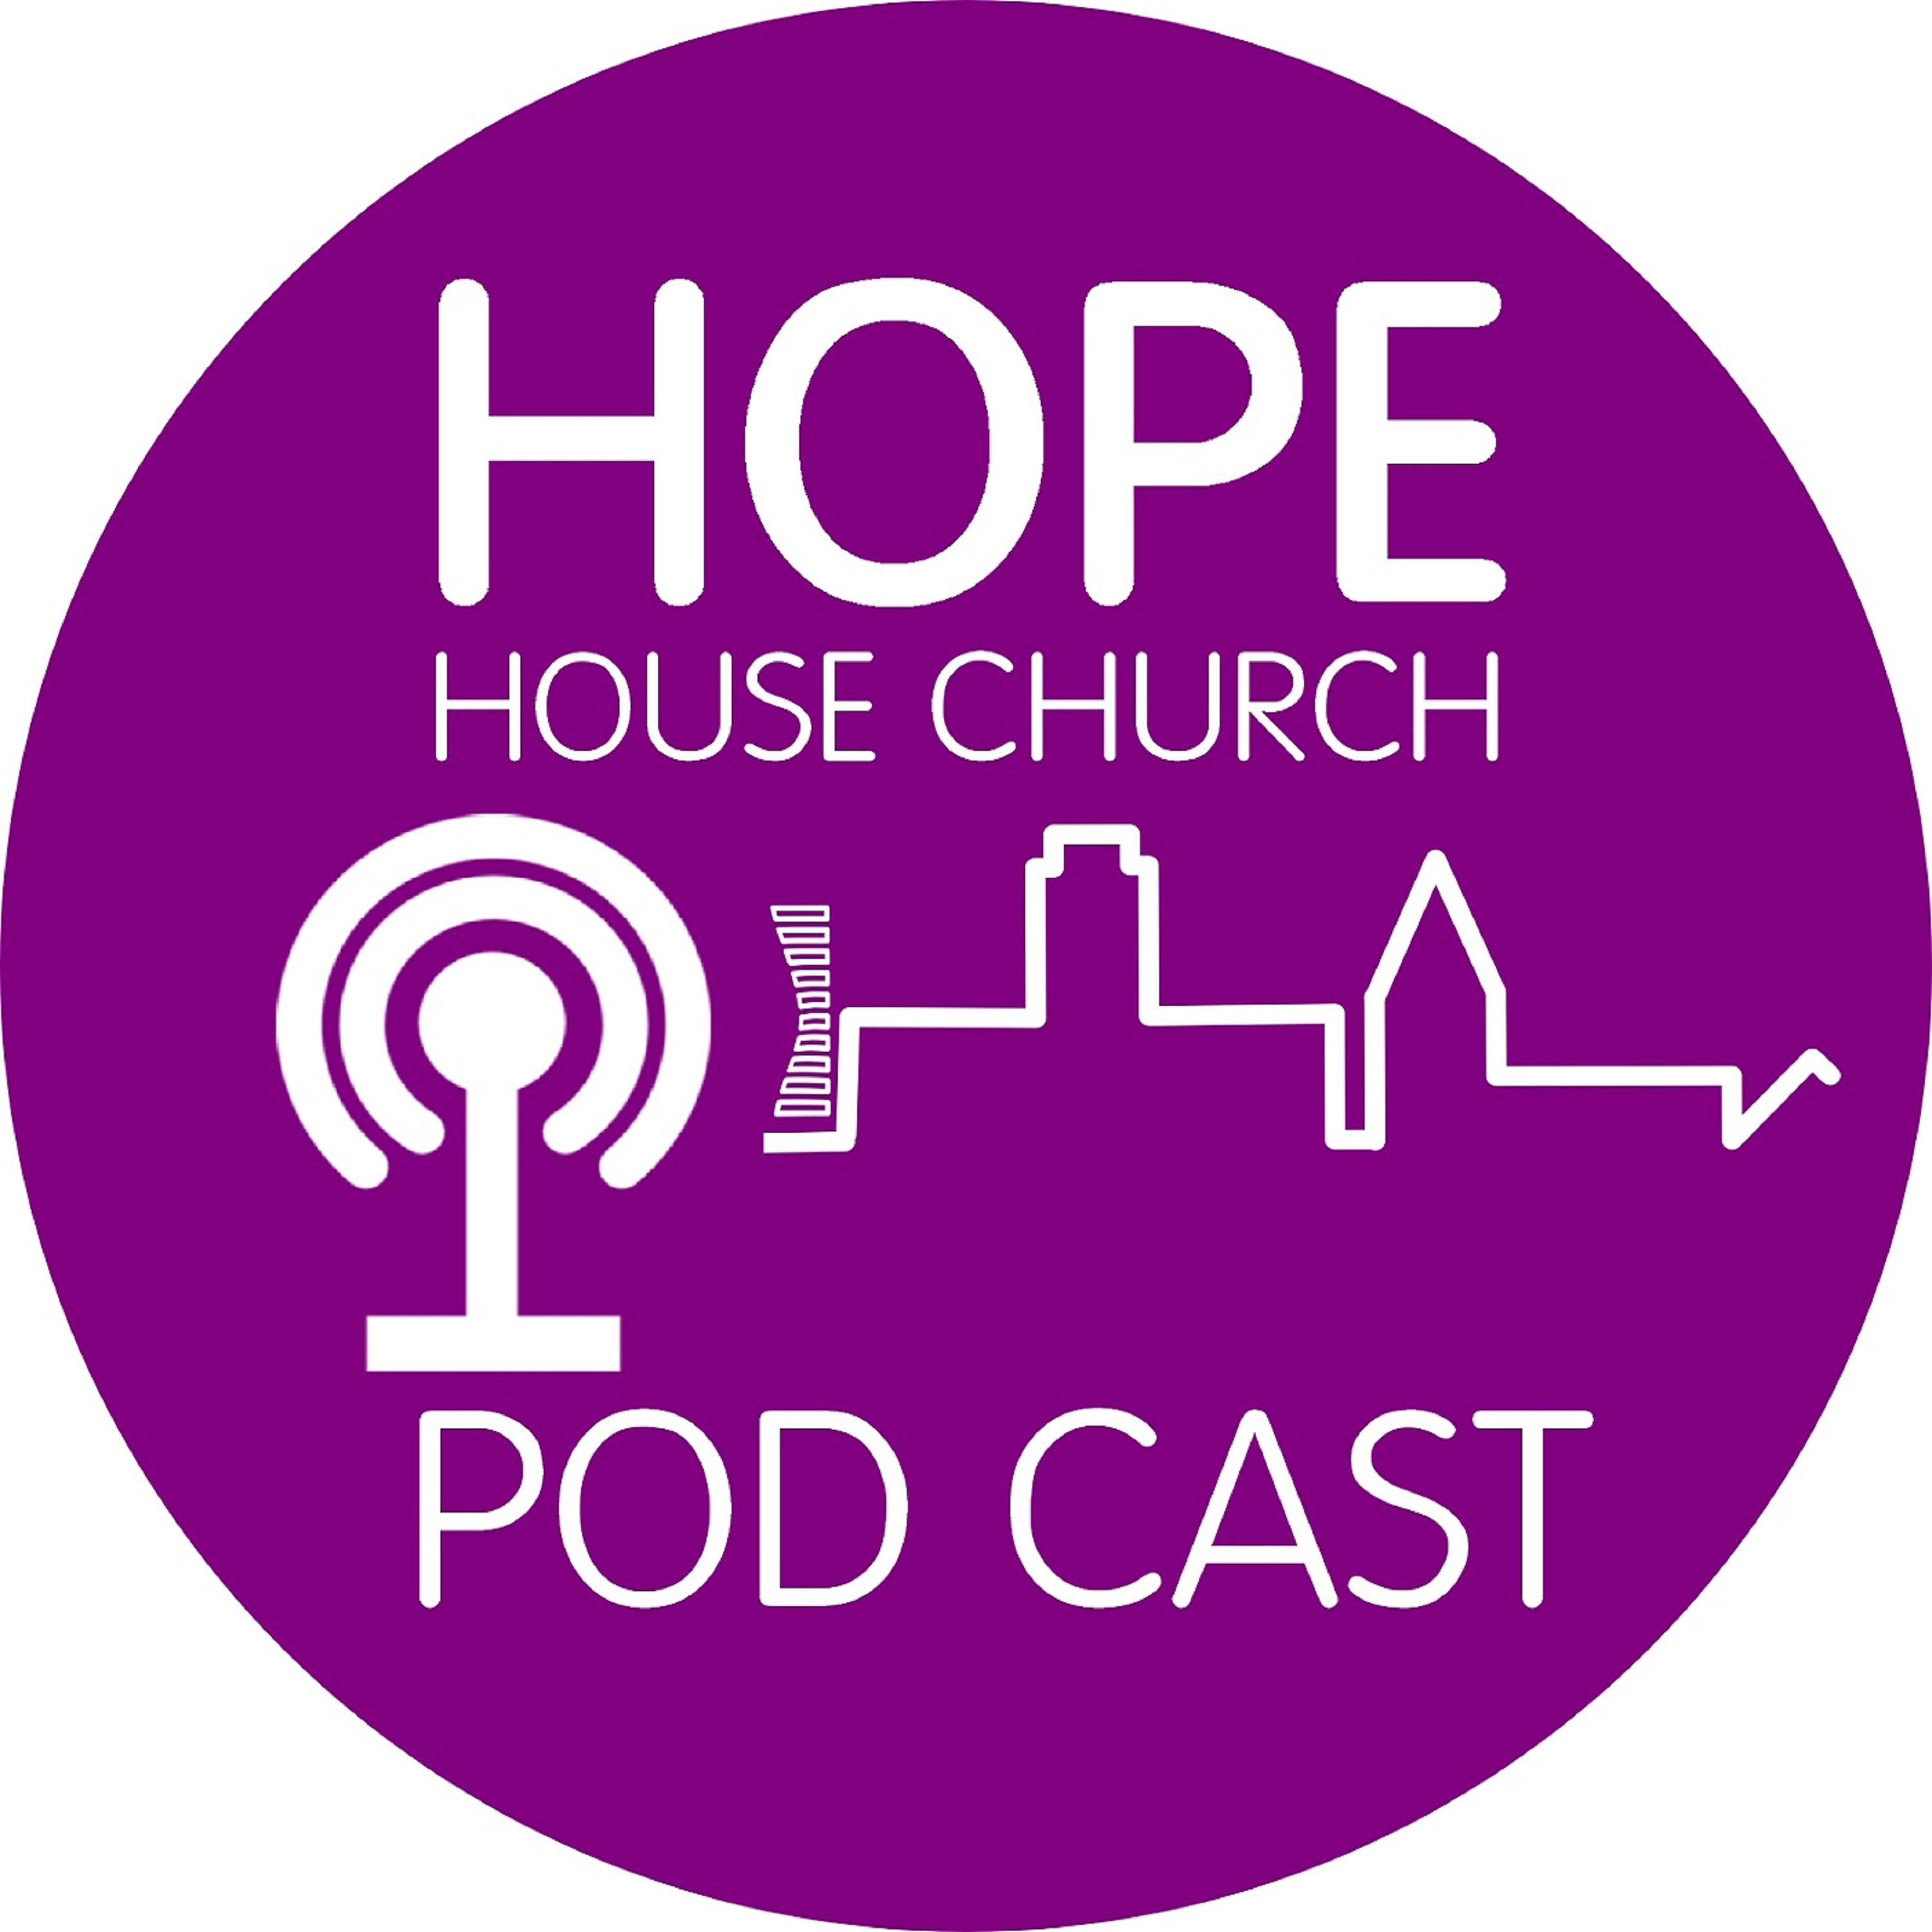 Podcast from Hope House Church, Barnsley